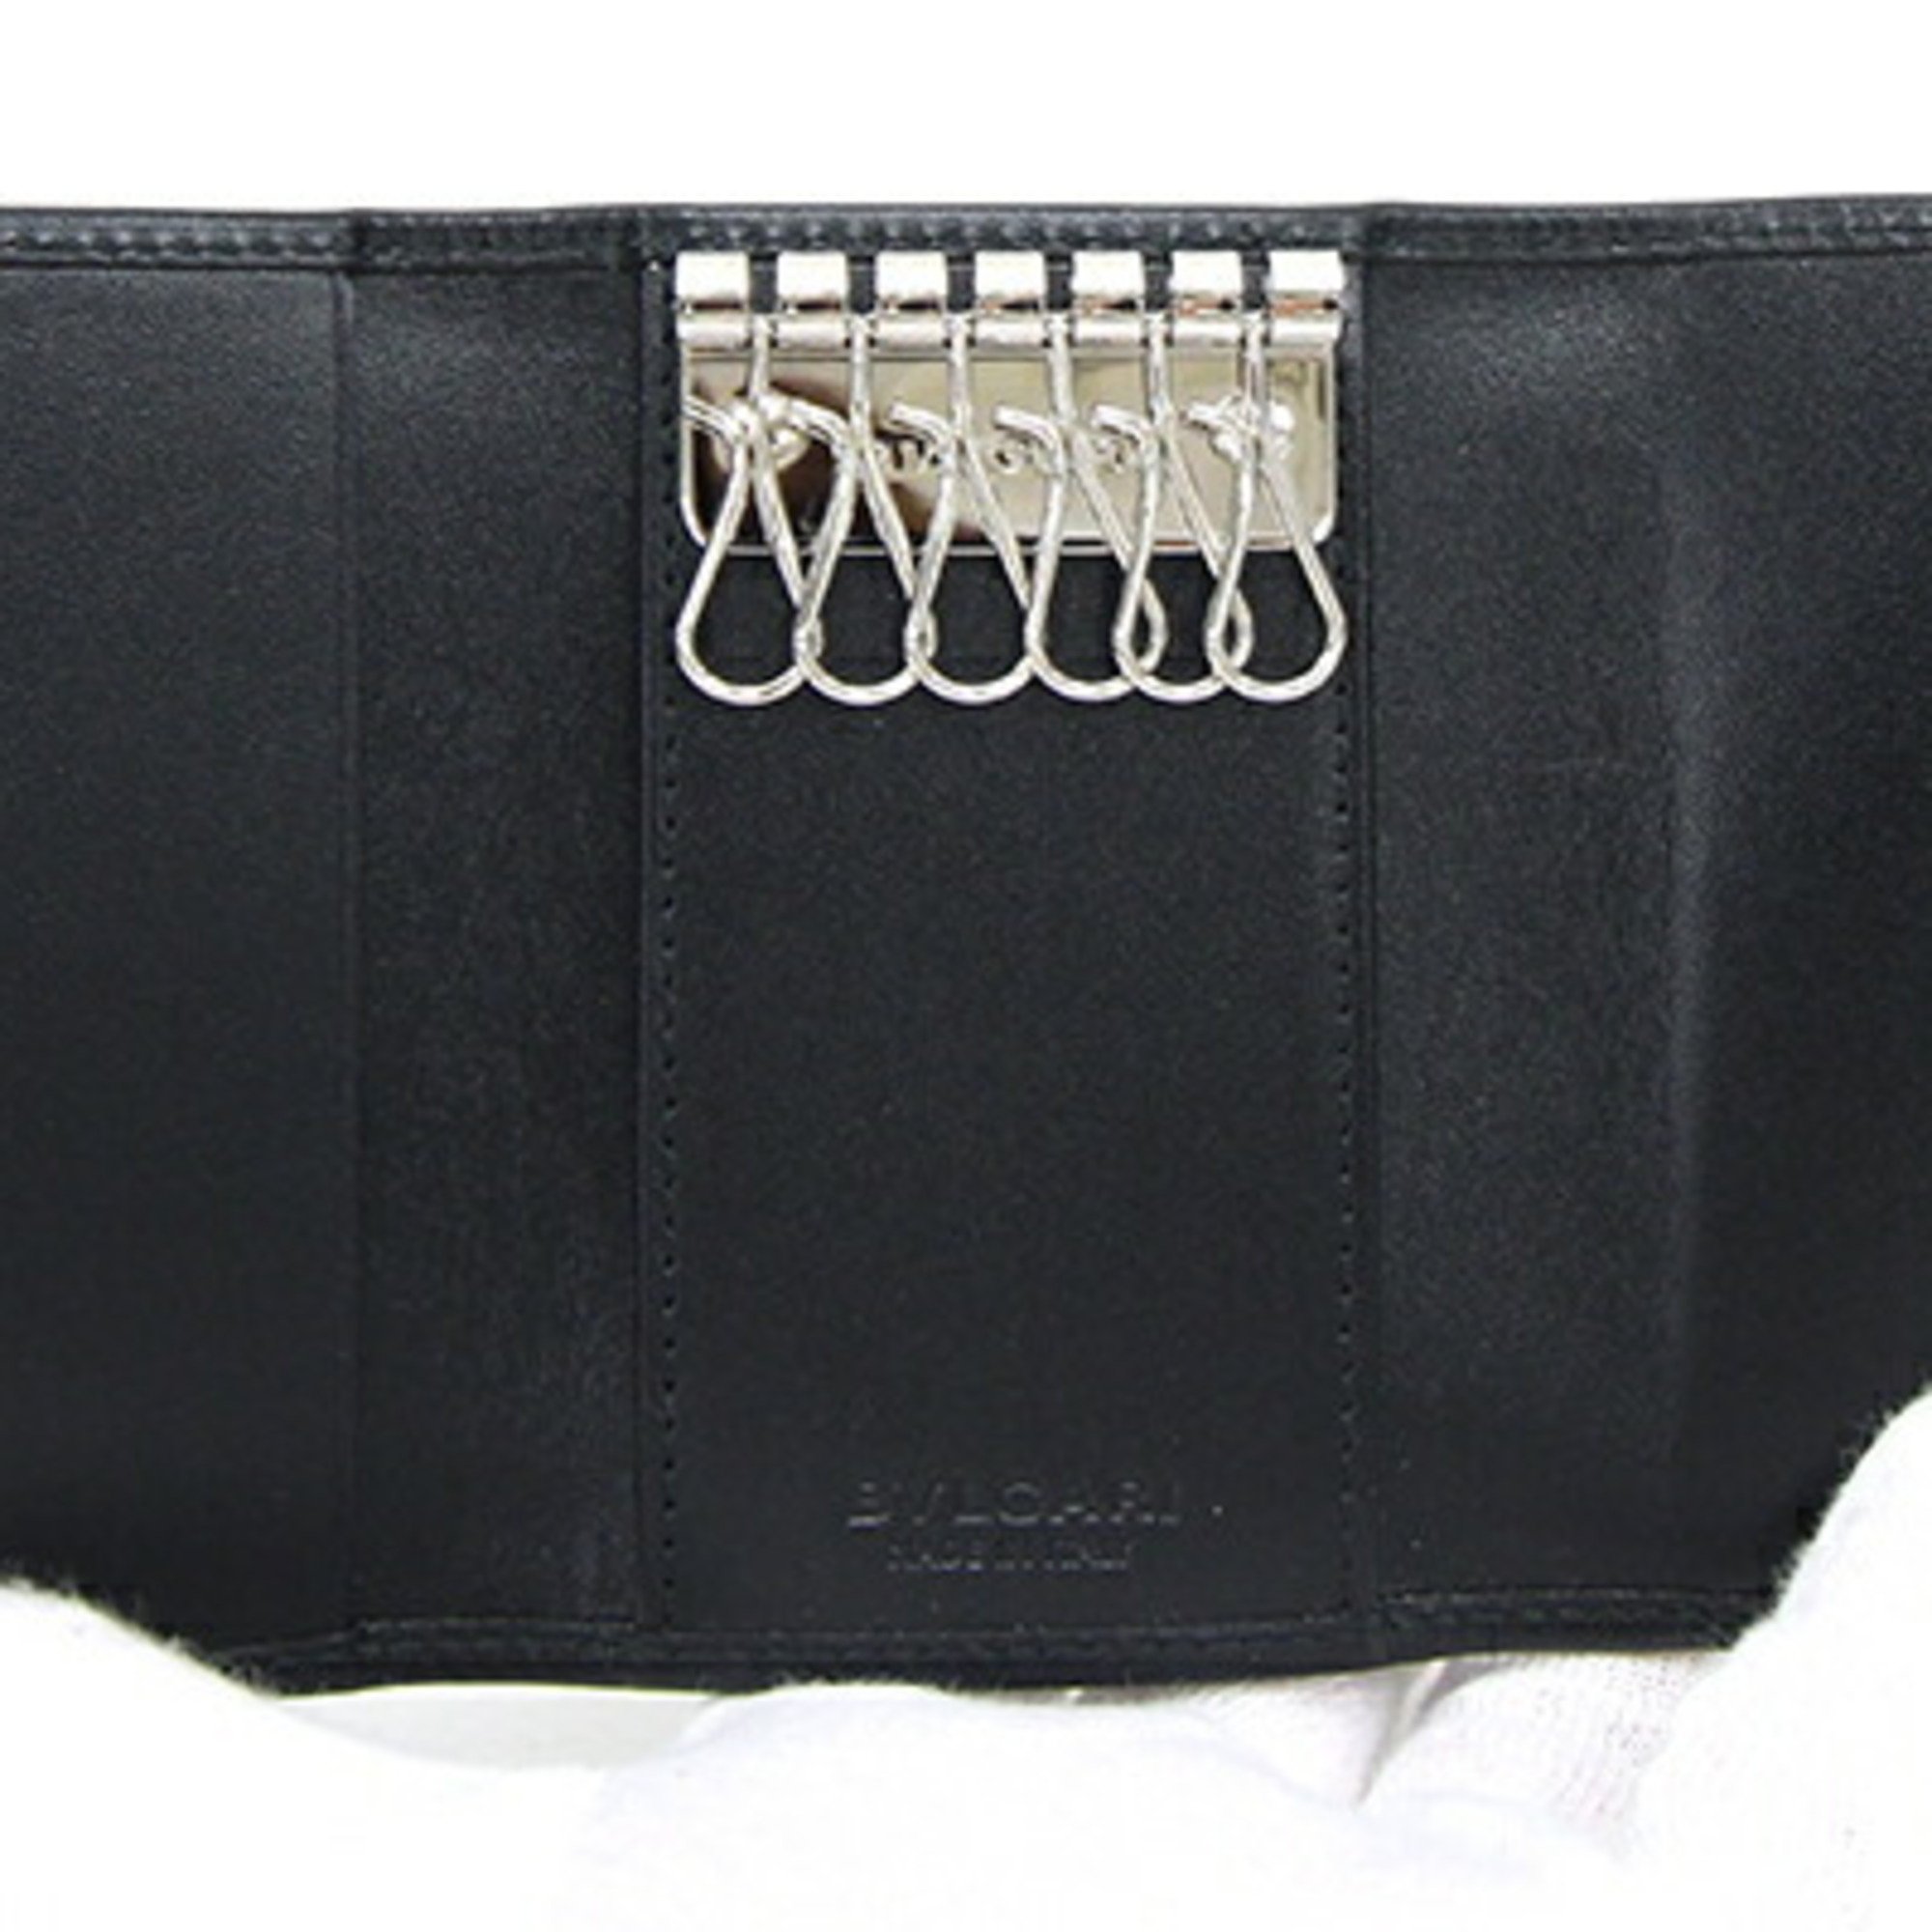 BVLGARI 6-ring key case Weekend 32583 Grey PVC coated canvas Leather Key holder Men's